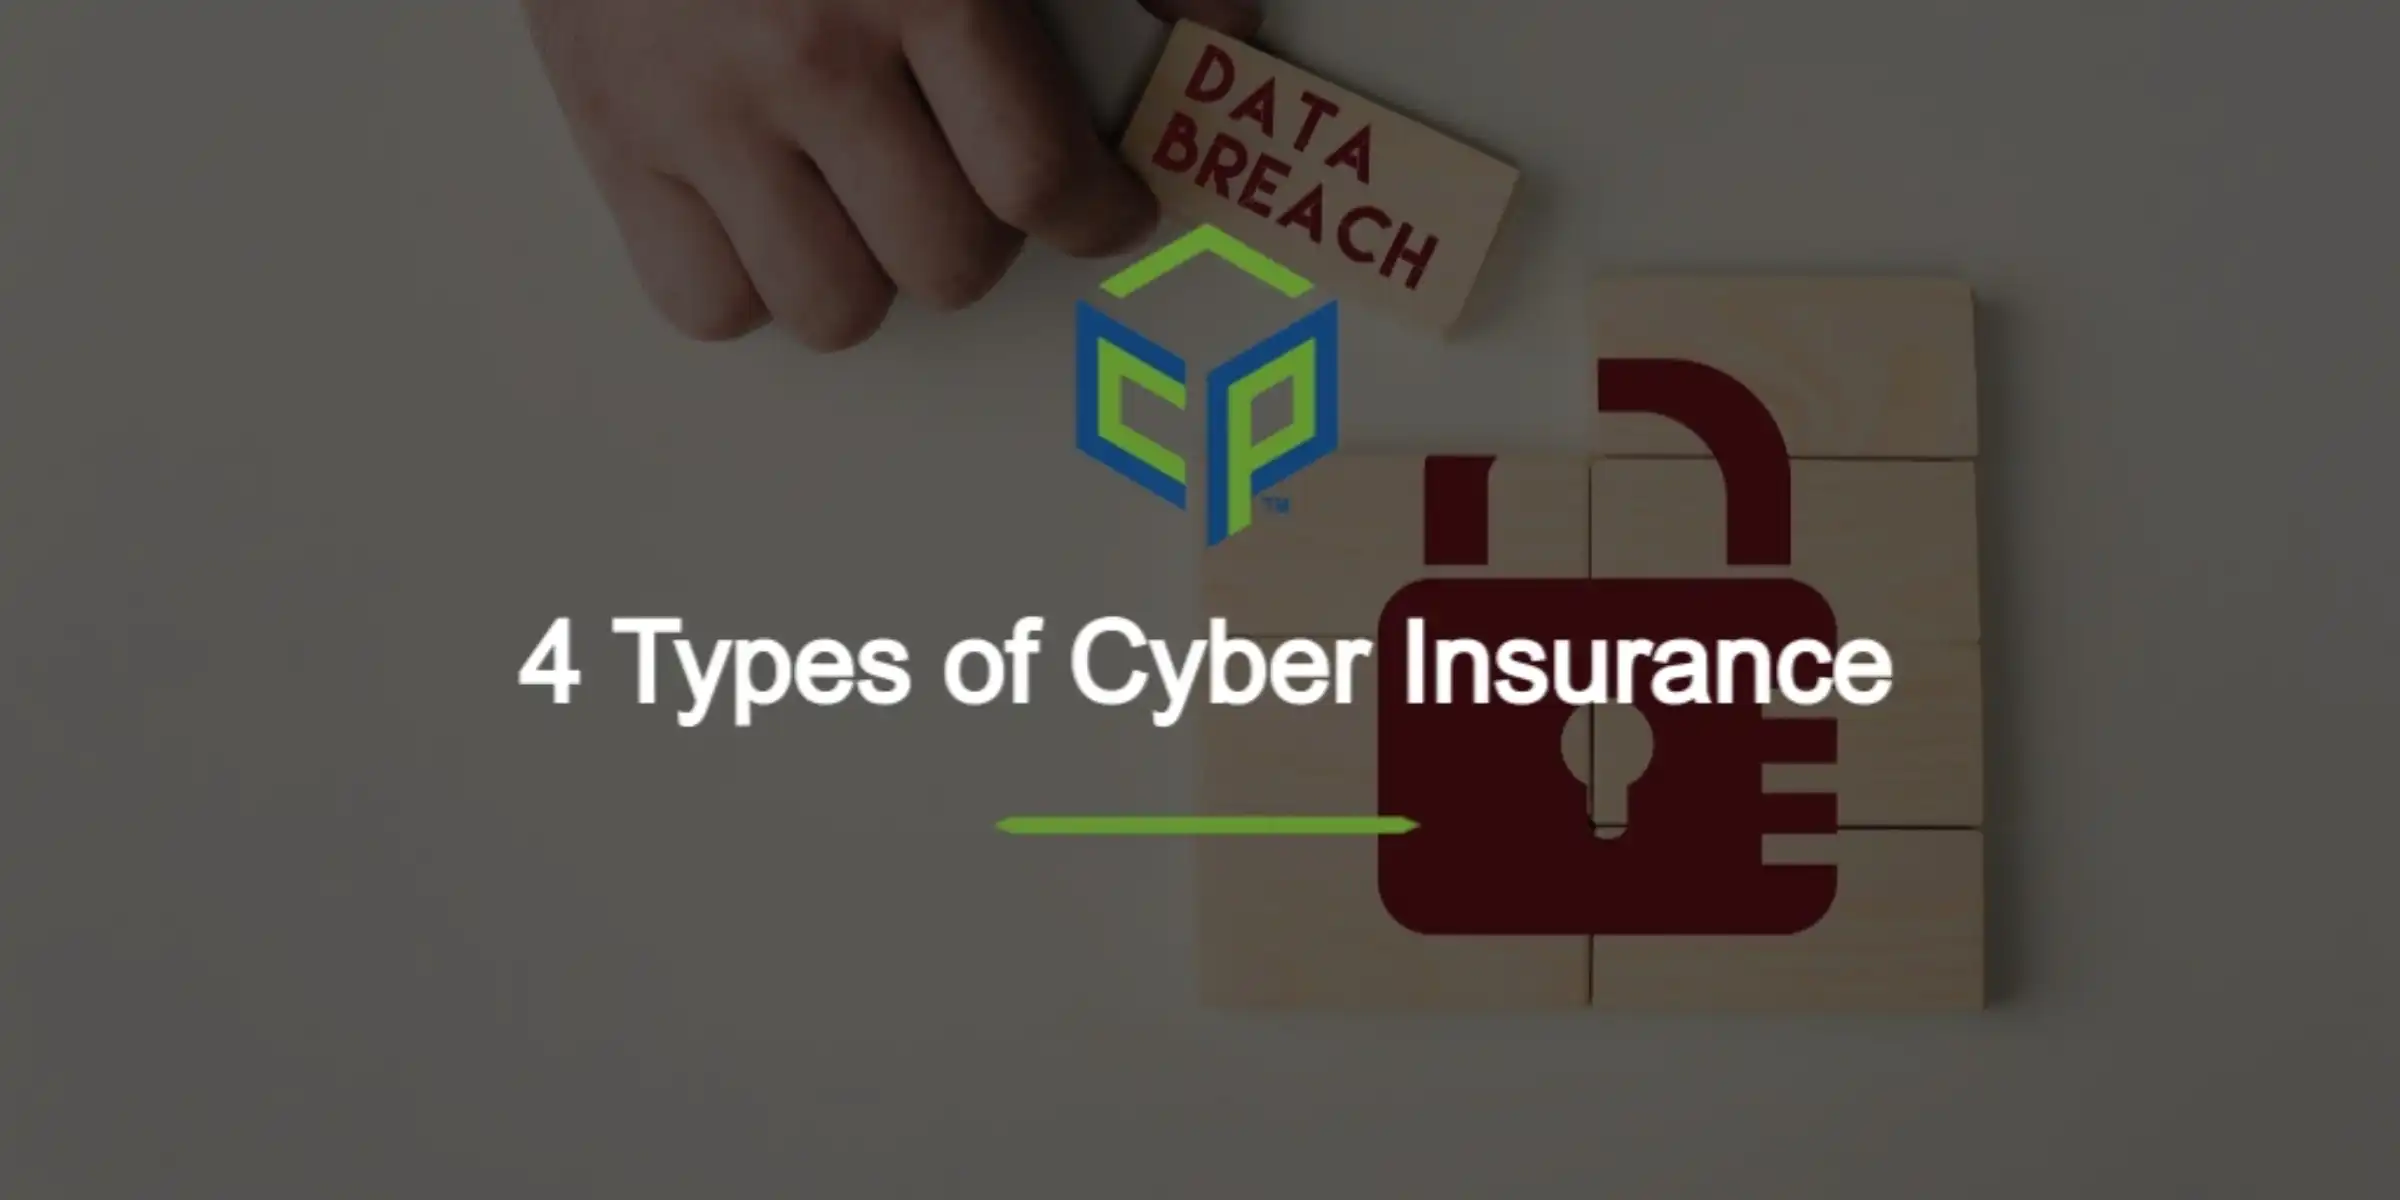 Type of Cyber Insurance